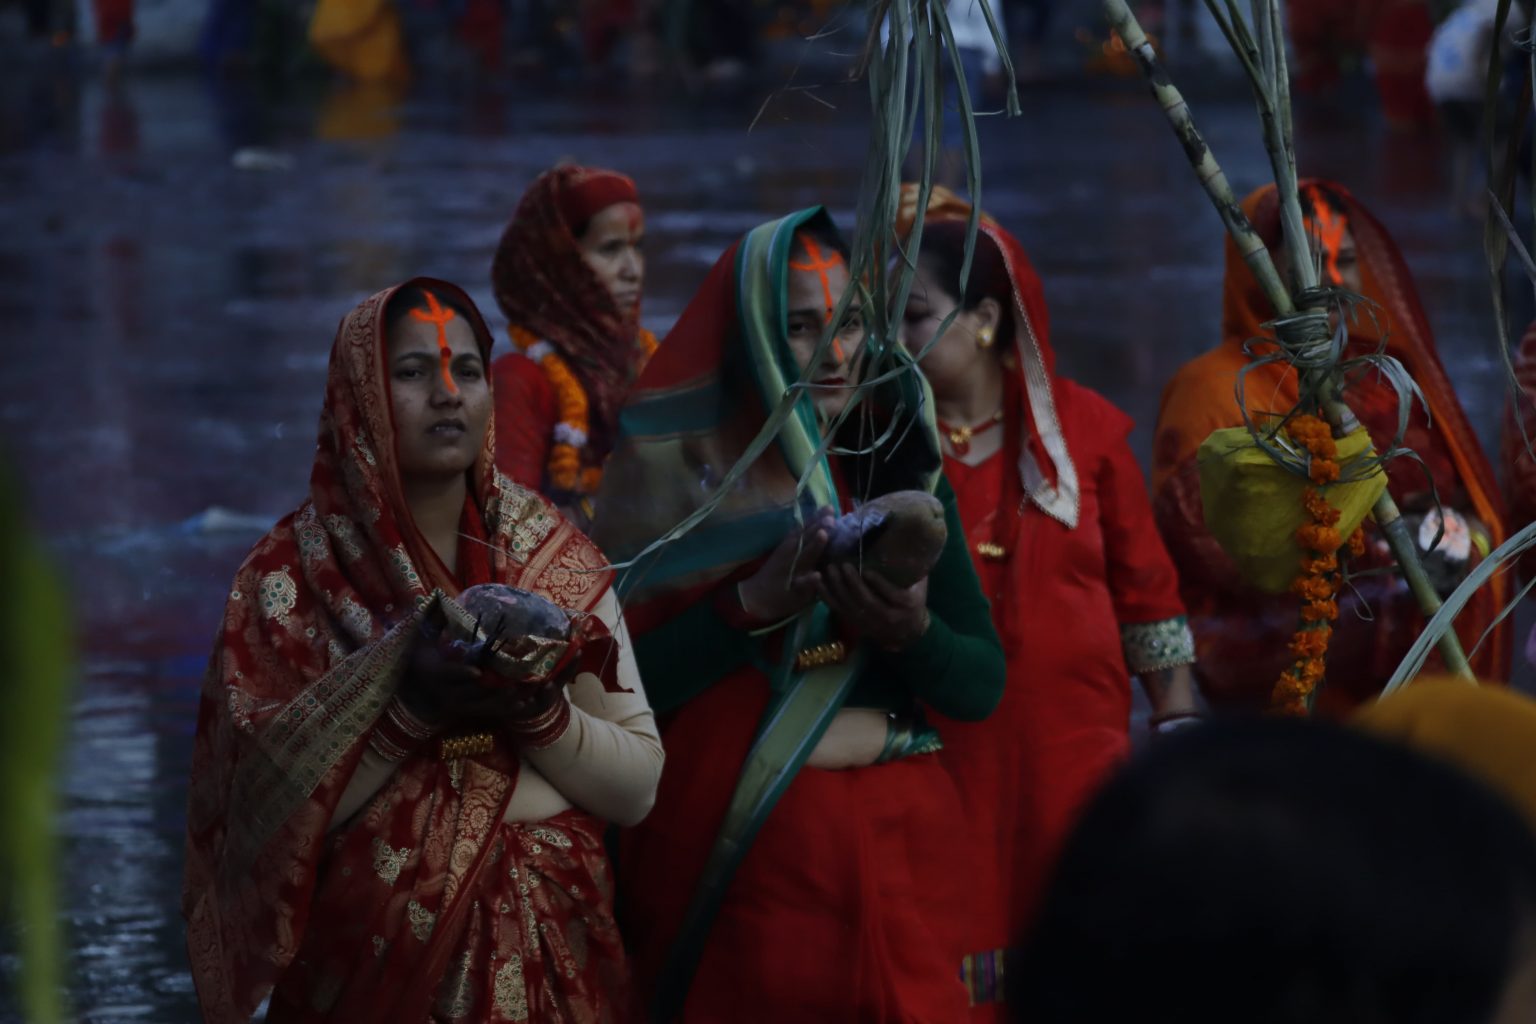 Chhath festival celebration at Gaurighat (photos)